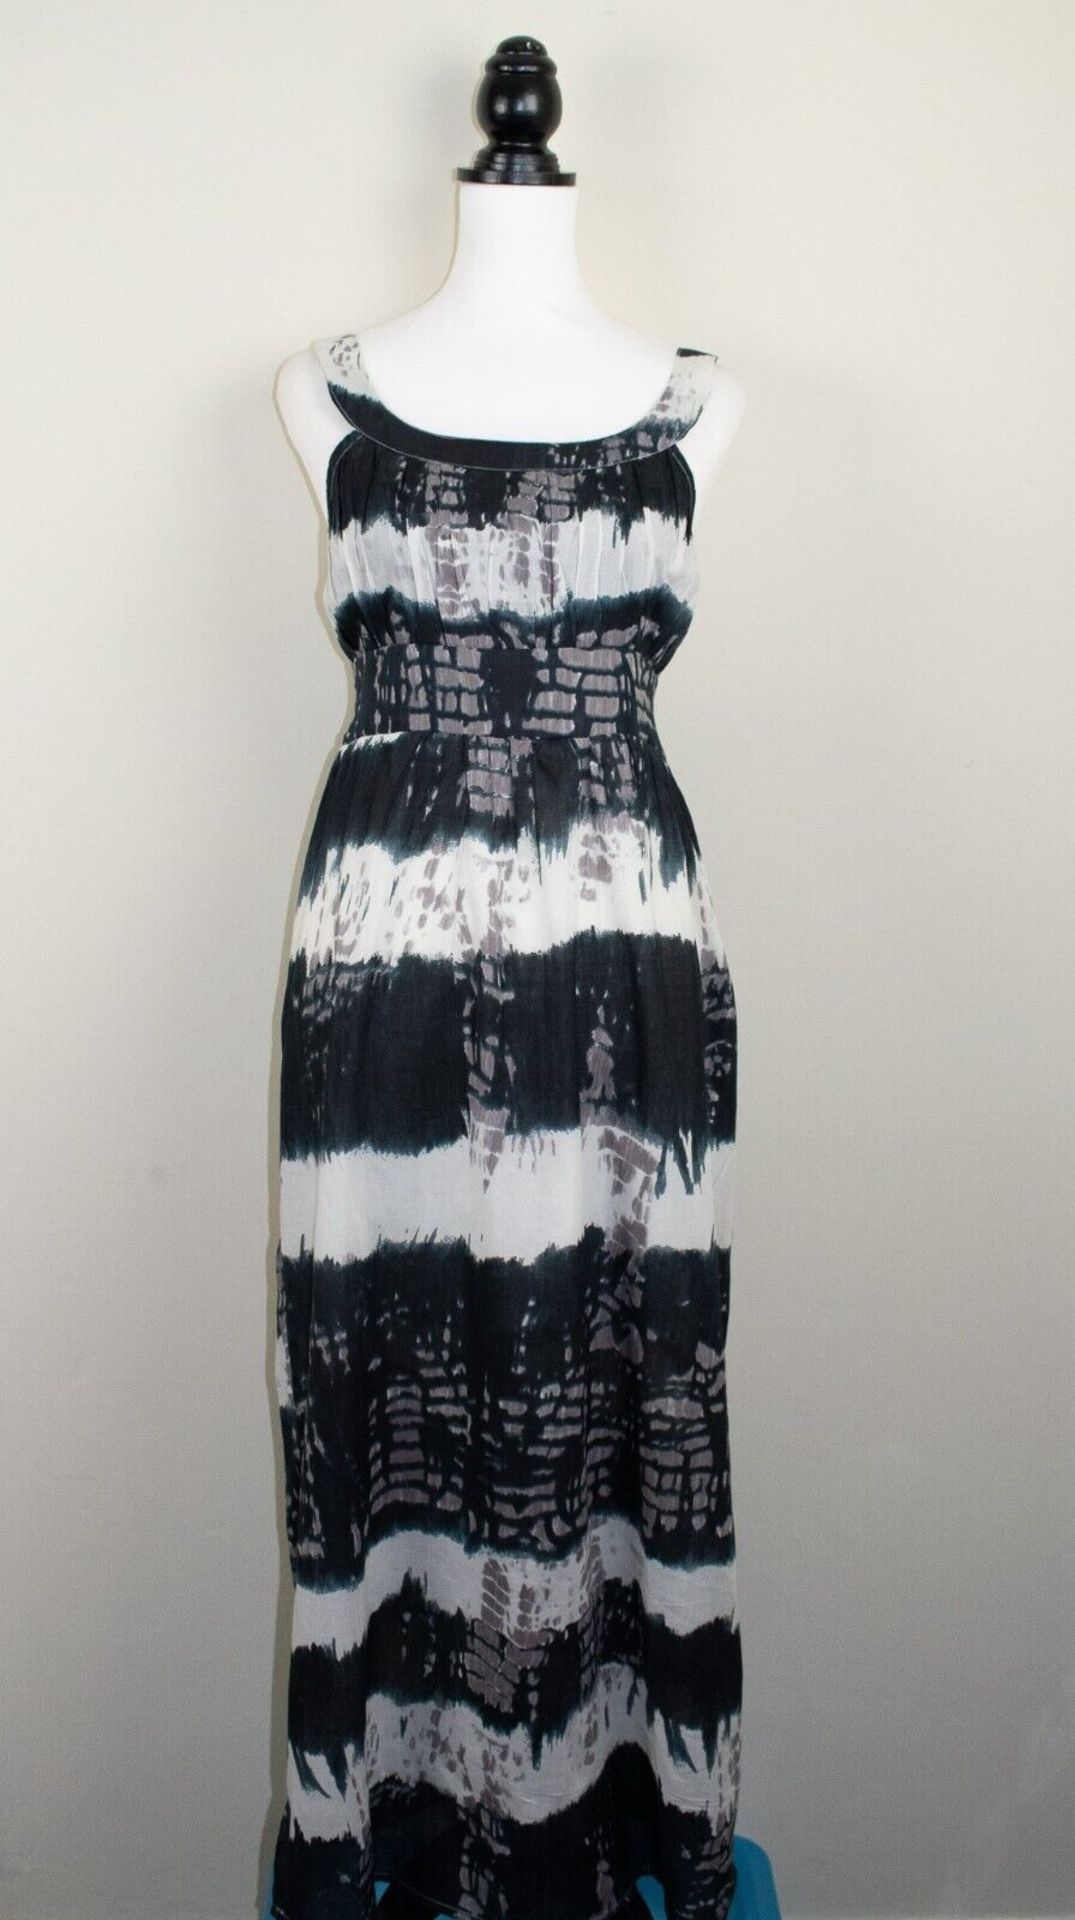 20 x New Women's Maxi & Midi Dresses Clothing Ladieswear Fashion Boho Spring / Summer Styles - Image 4 of 11